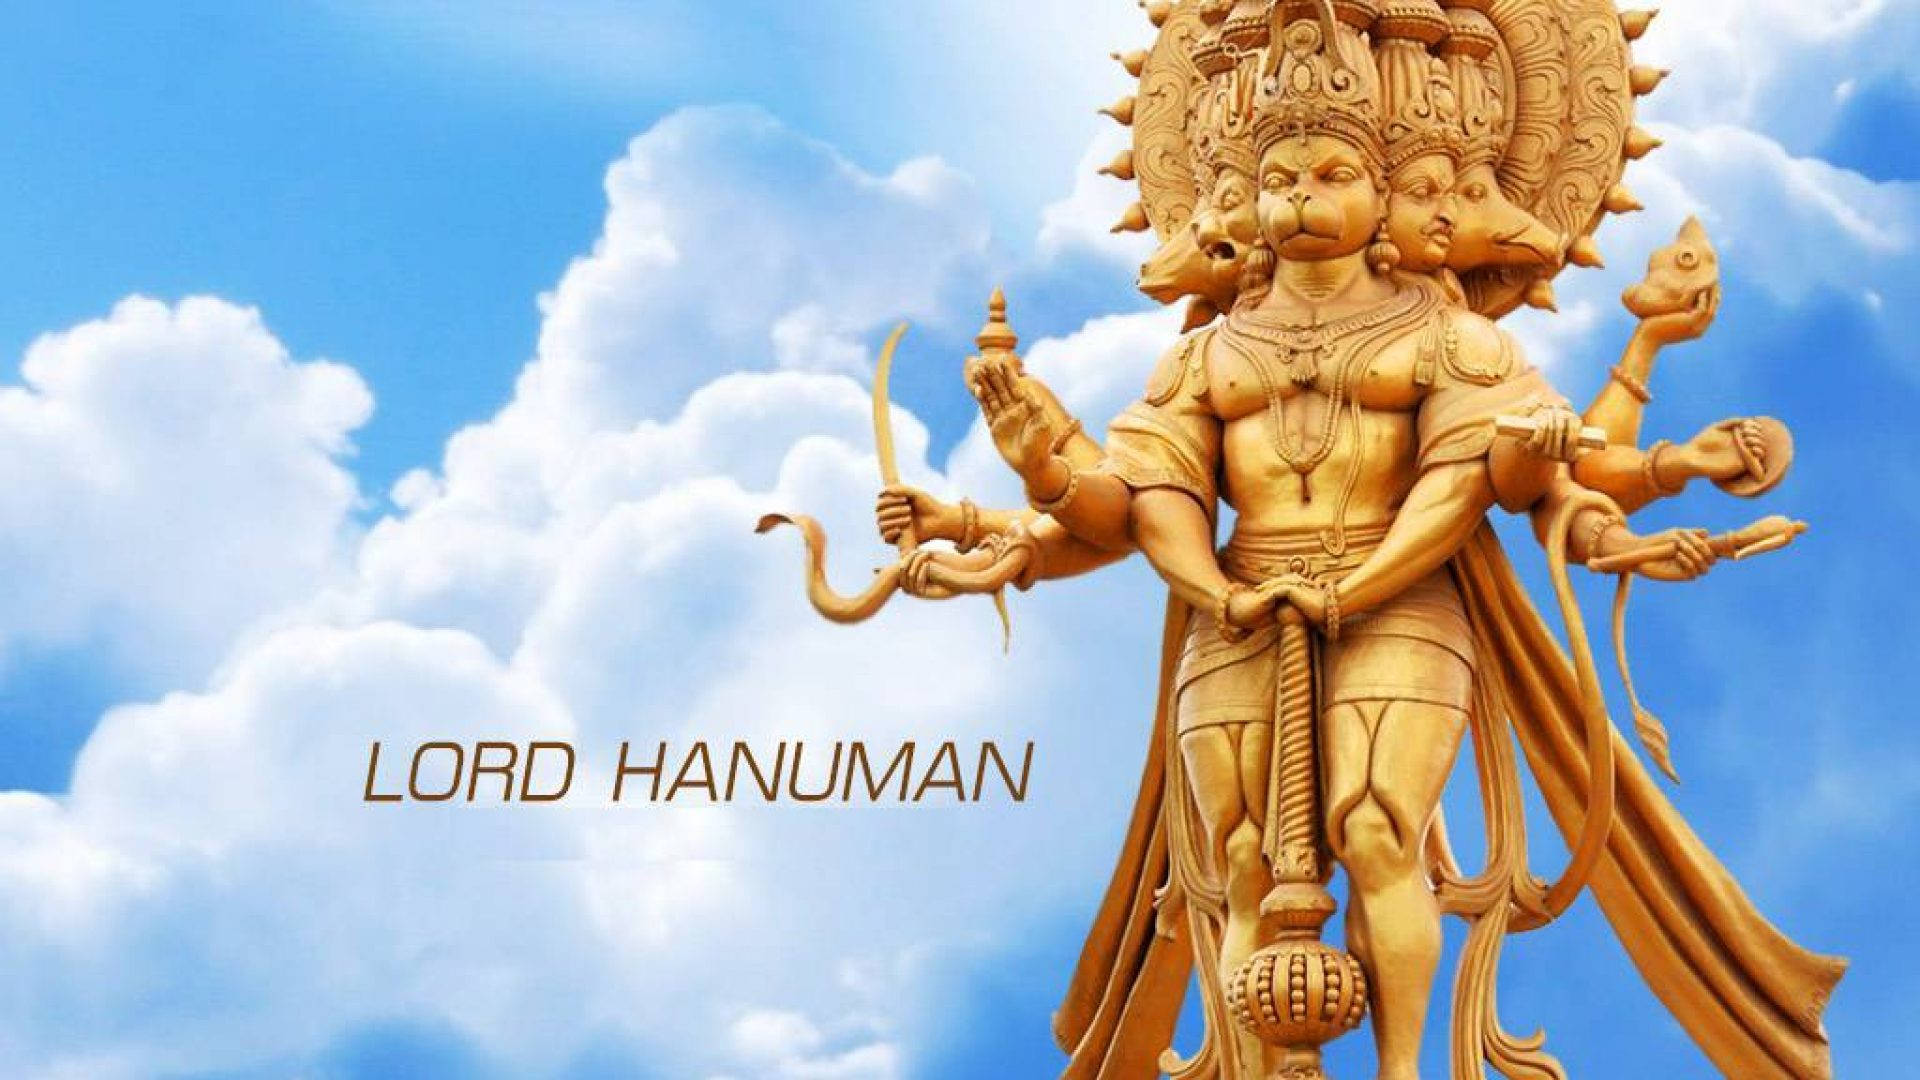 Panchmukhi Hanuman Gold Statue With Clouds Background